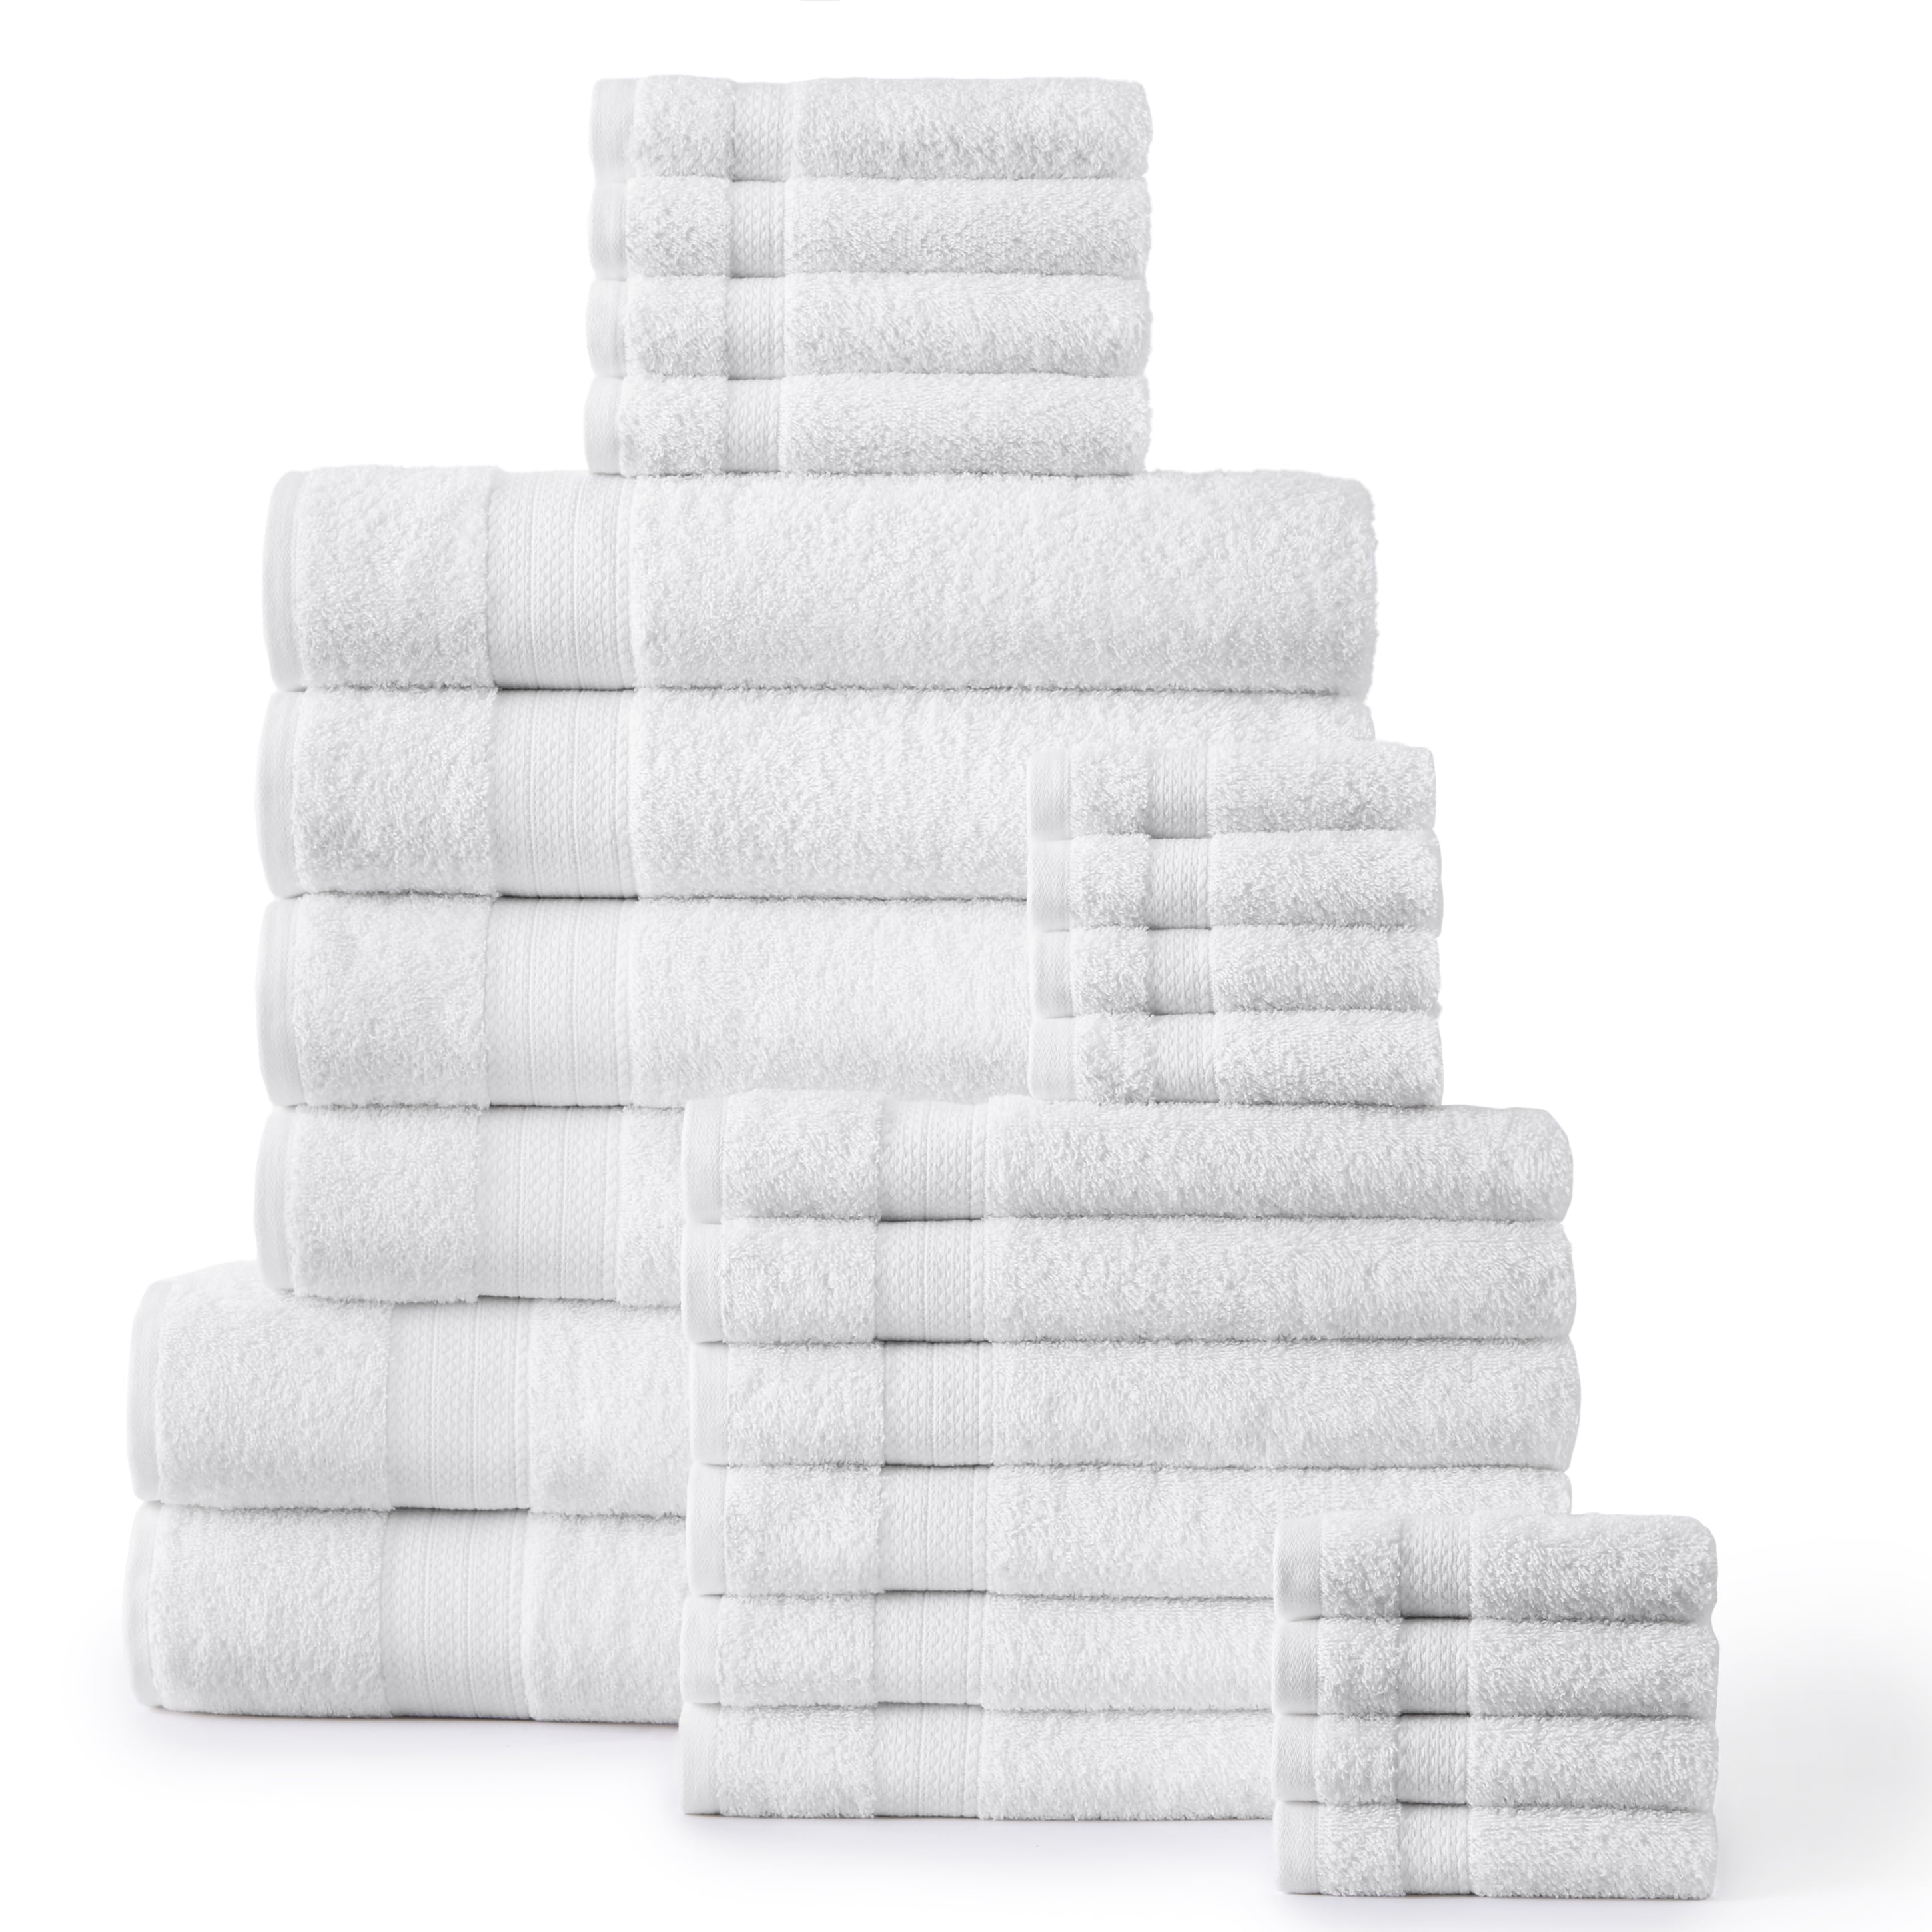 24PC Bath Towel Set (2 Sheets, 4 Bath, 6 Hand, 4 Fingertip & 8 Wash) - White,  Addy Home Best Value 